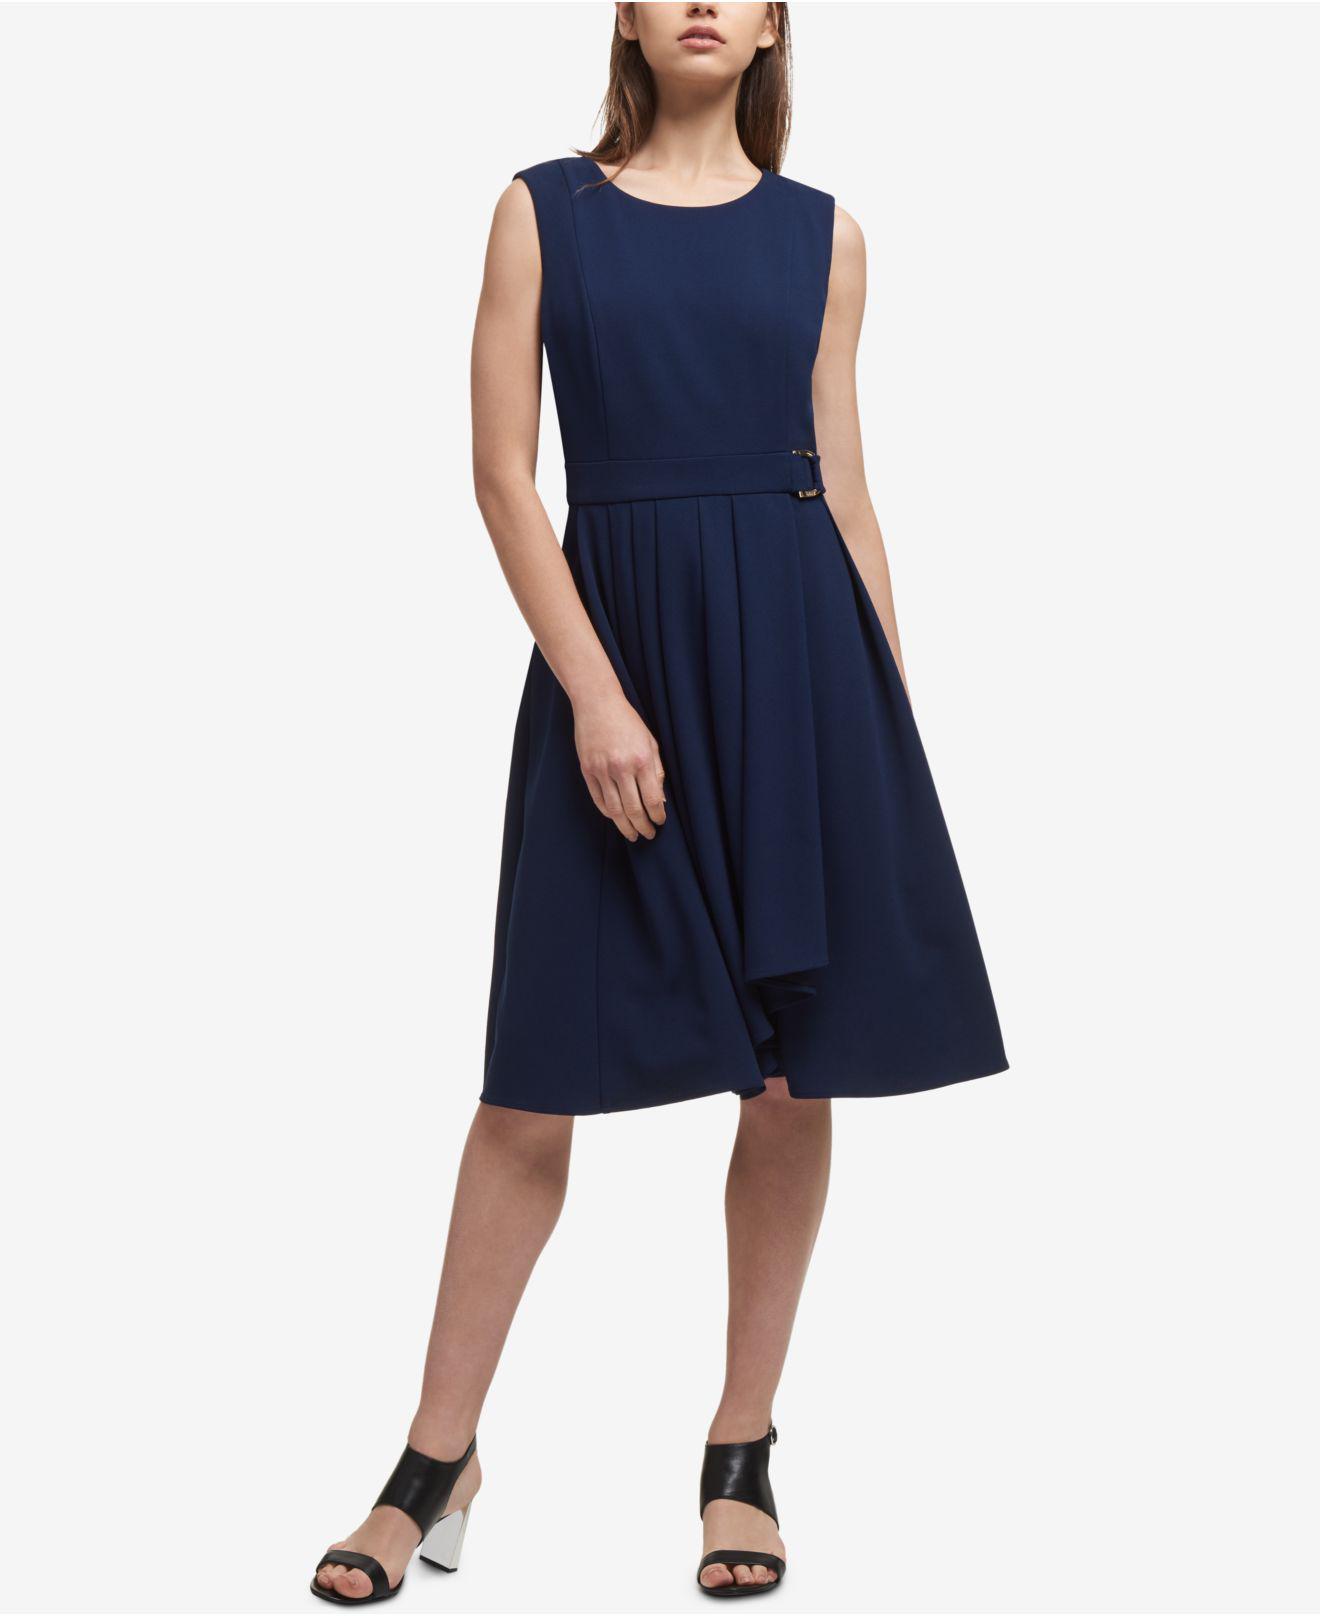 dkny navy blue dress